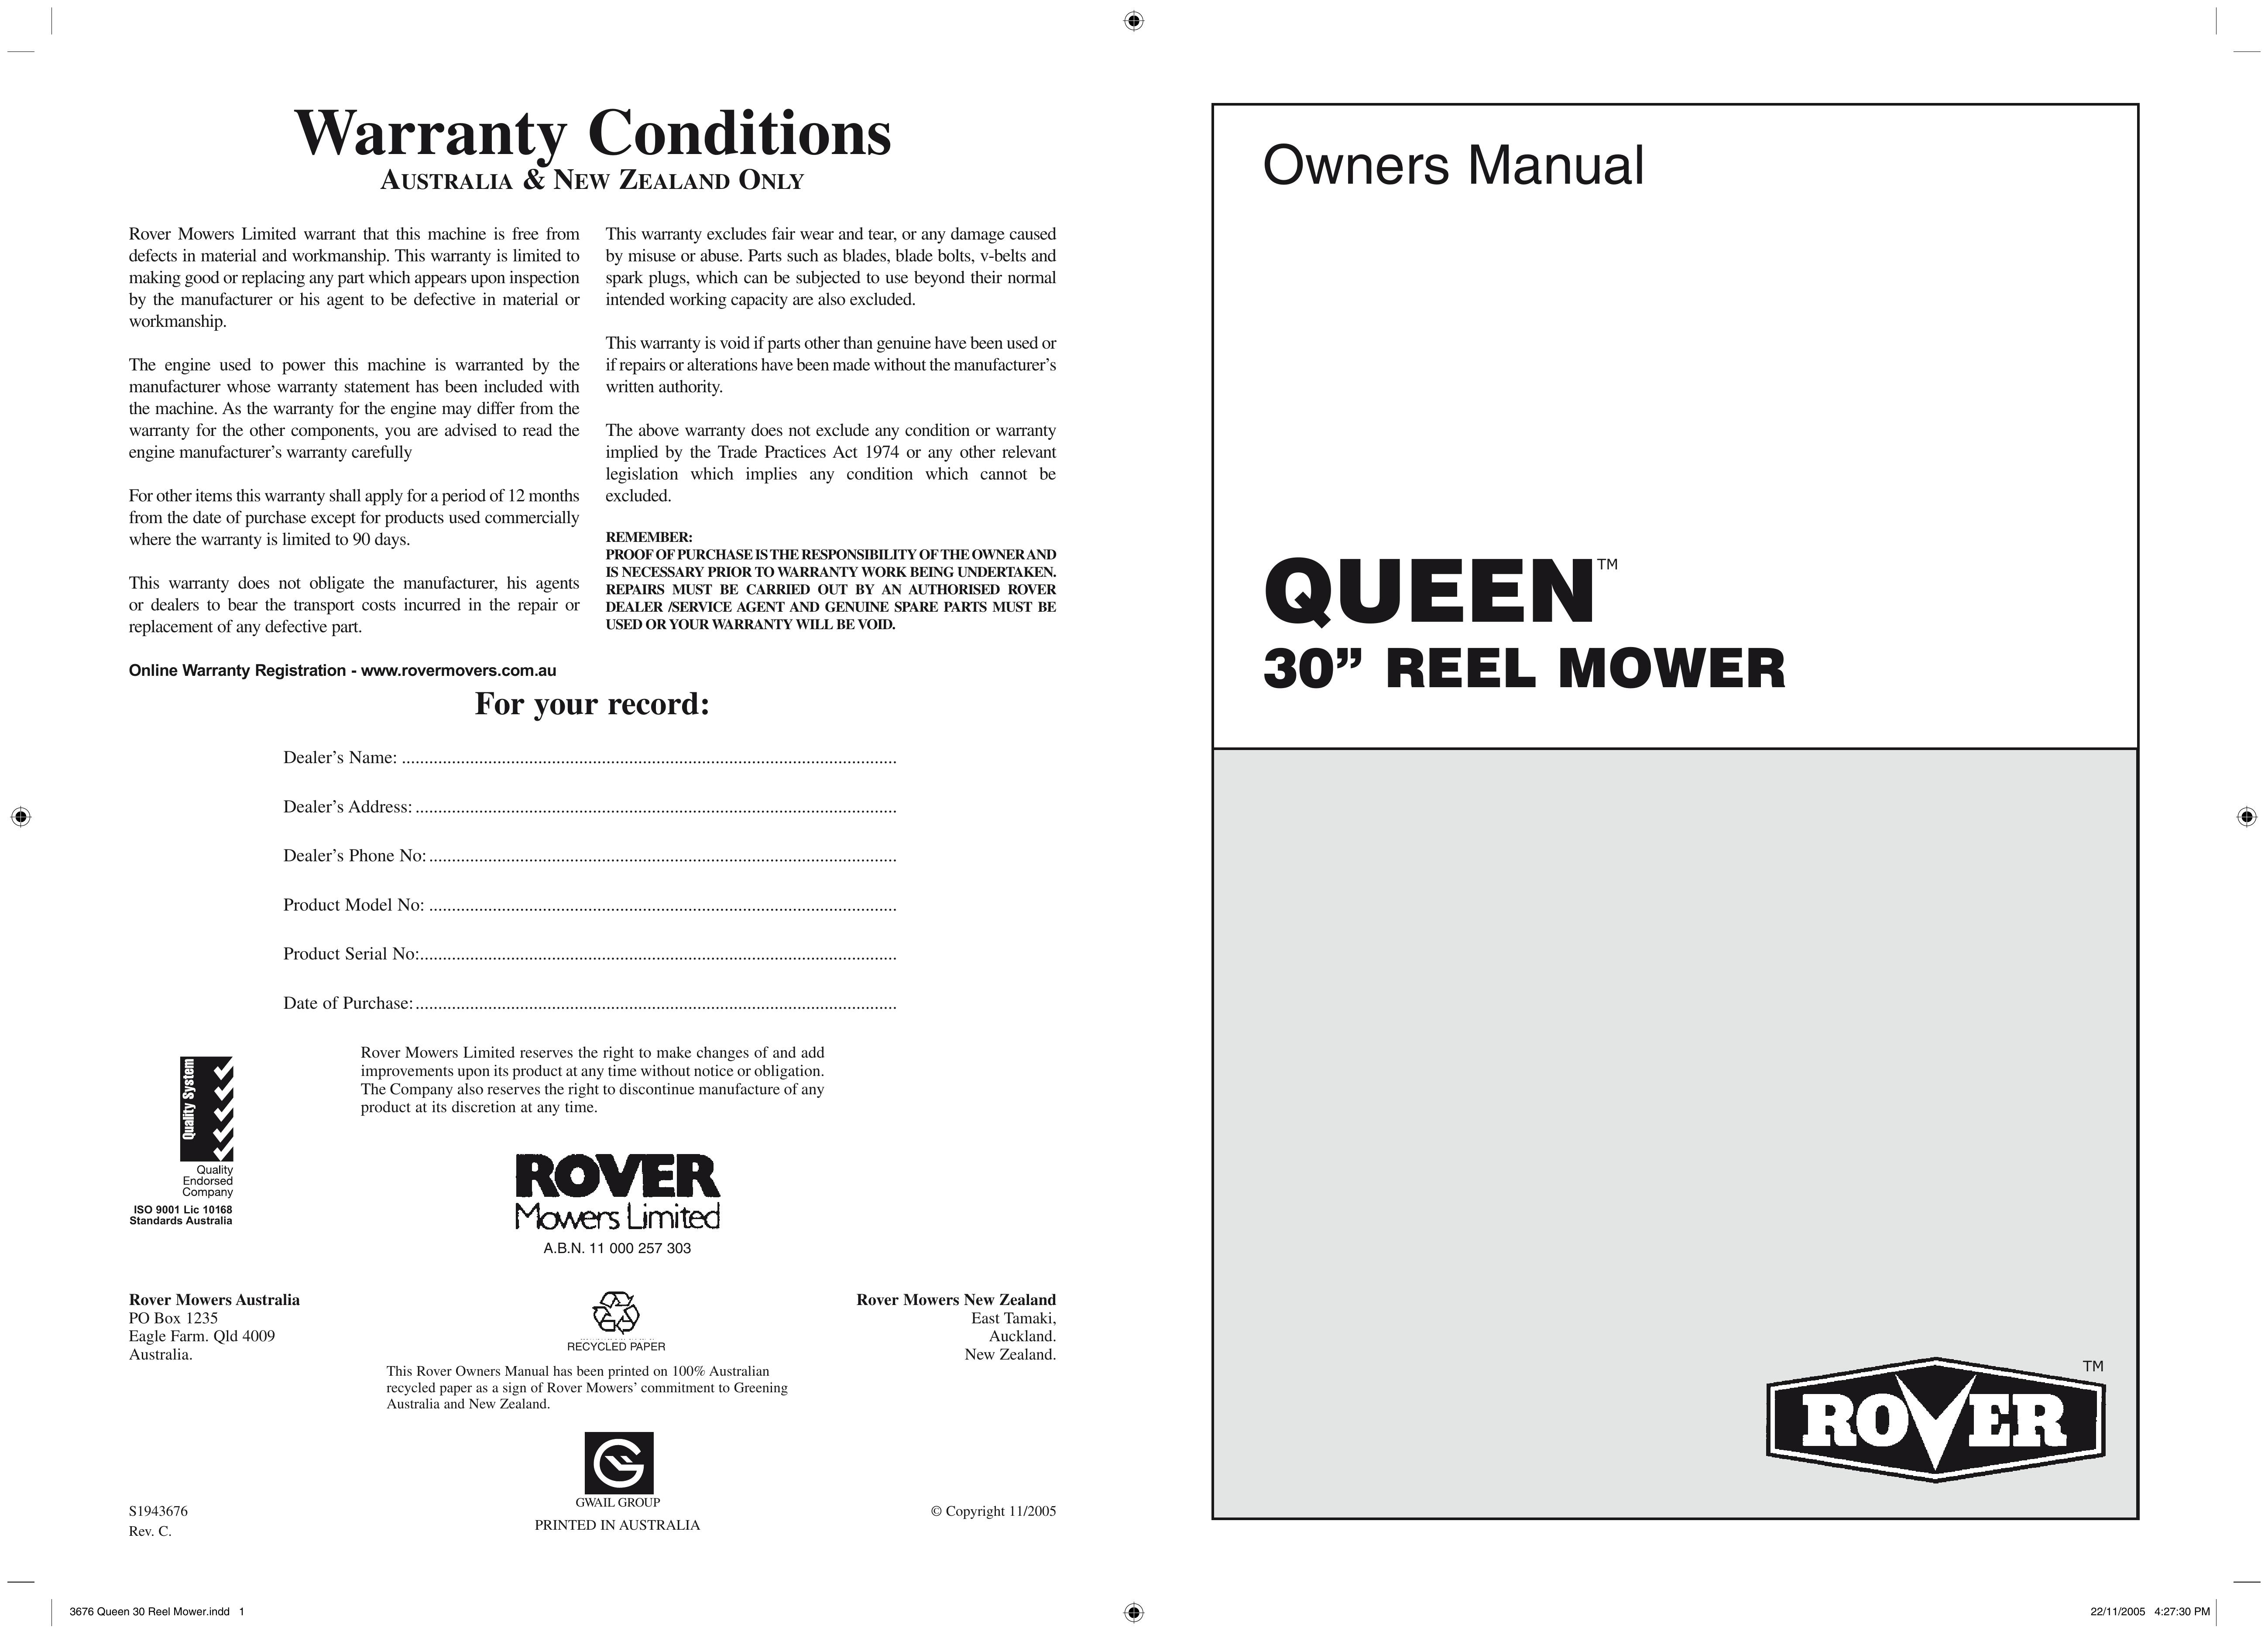 Rover 300433 Lawn Mower User Manual